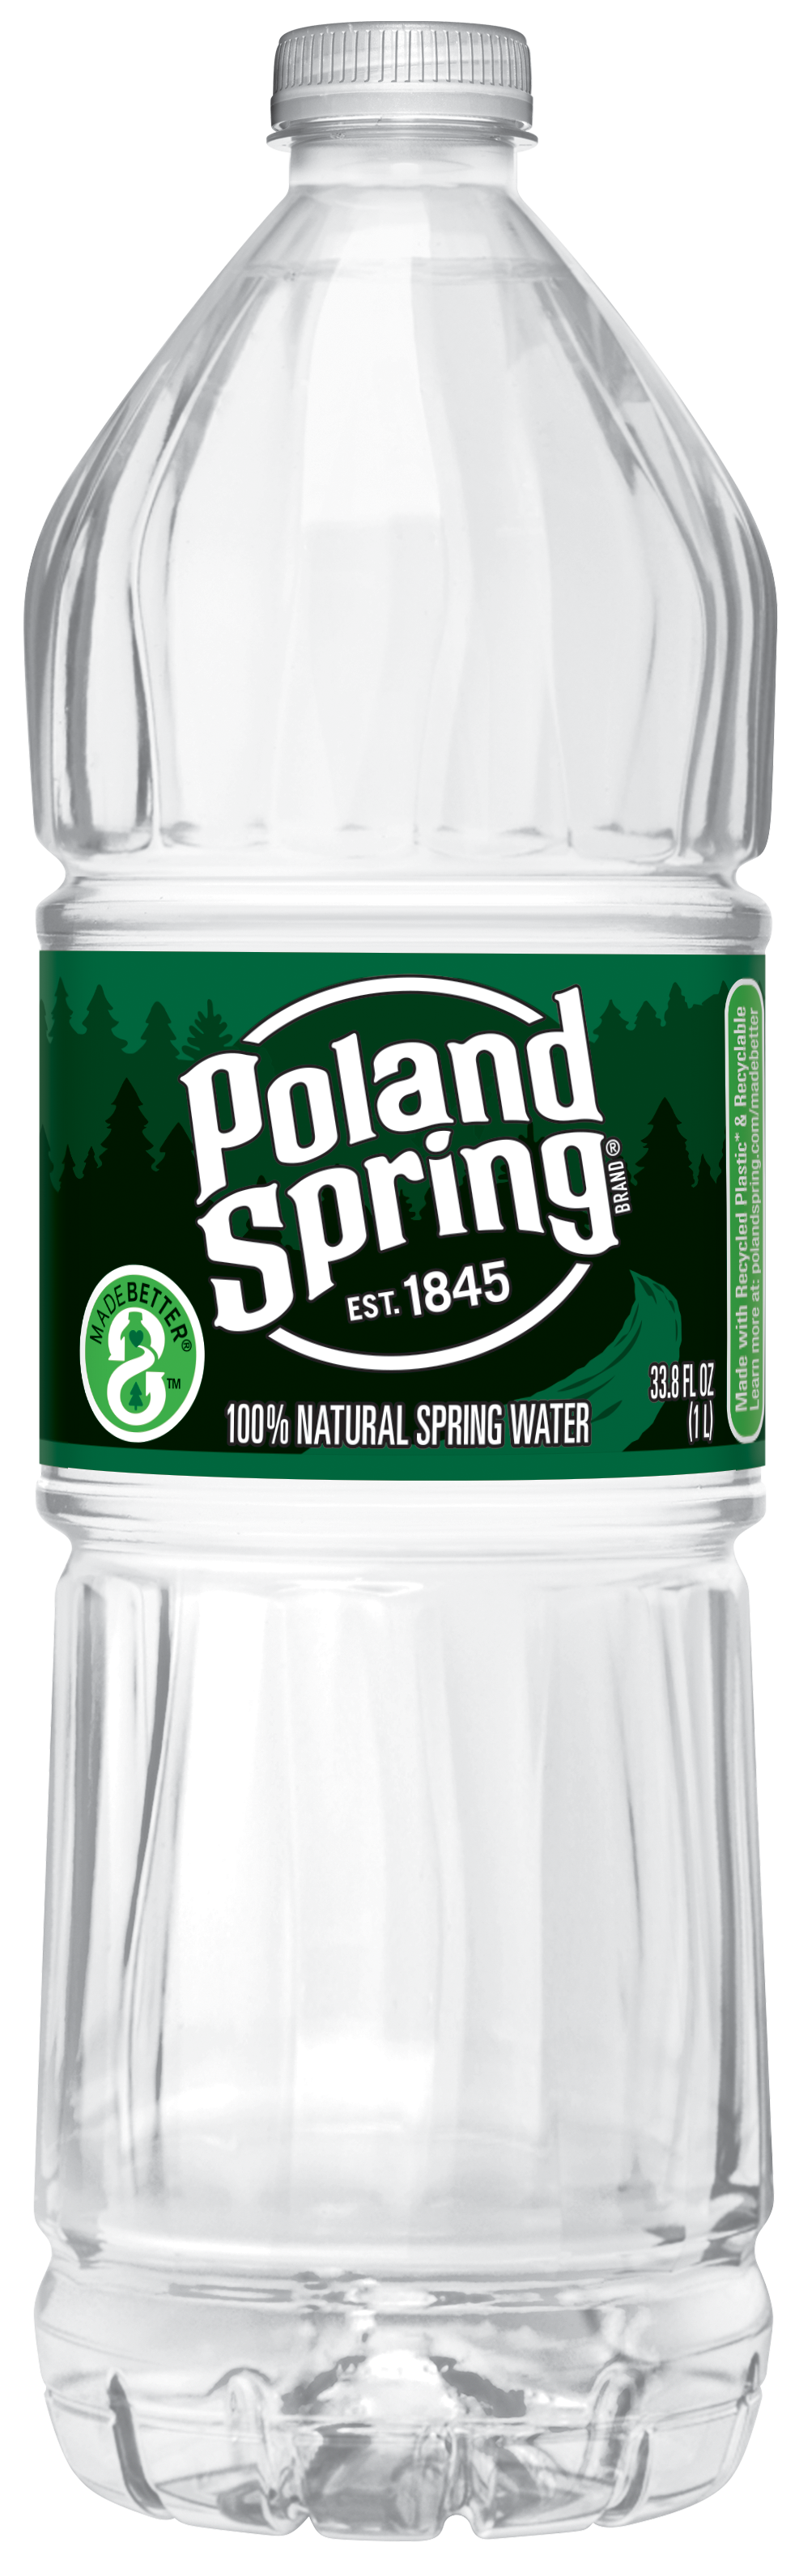 Poland Spring 1 L bottle, 18-pack